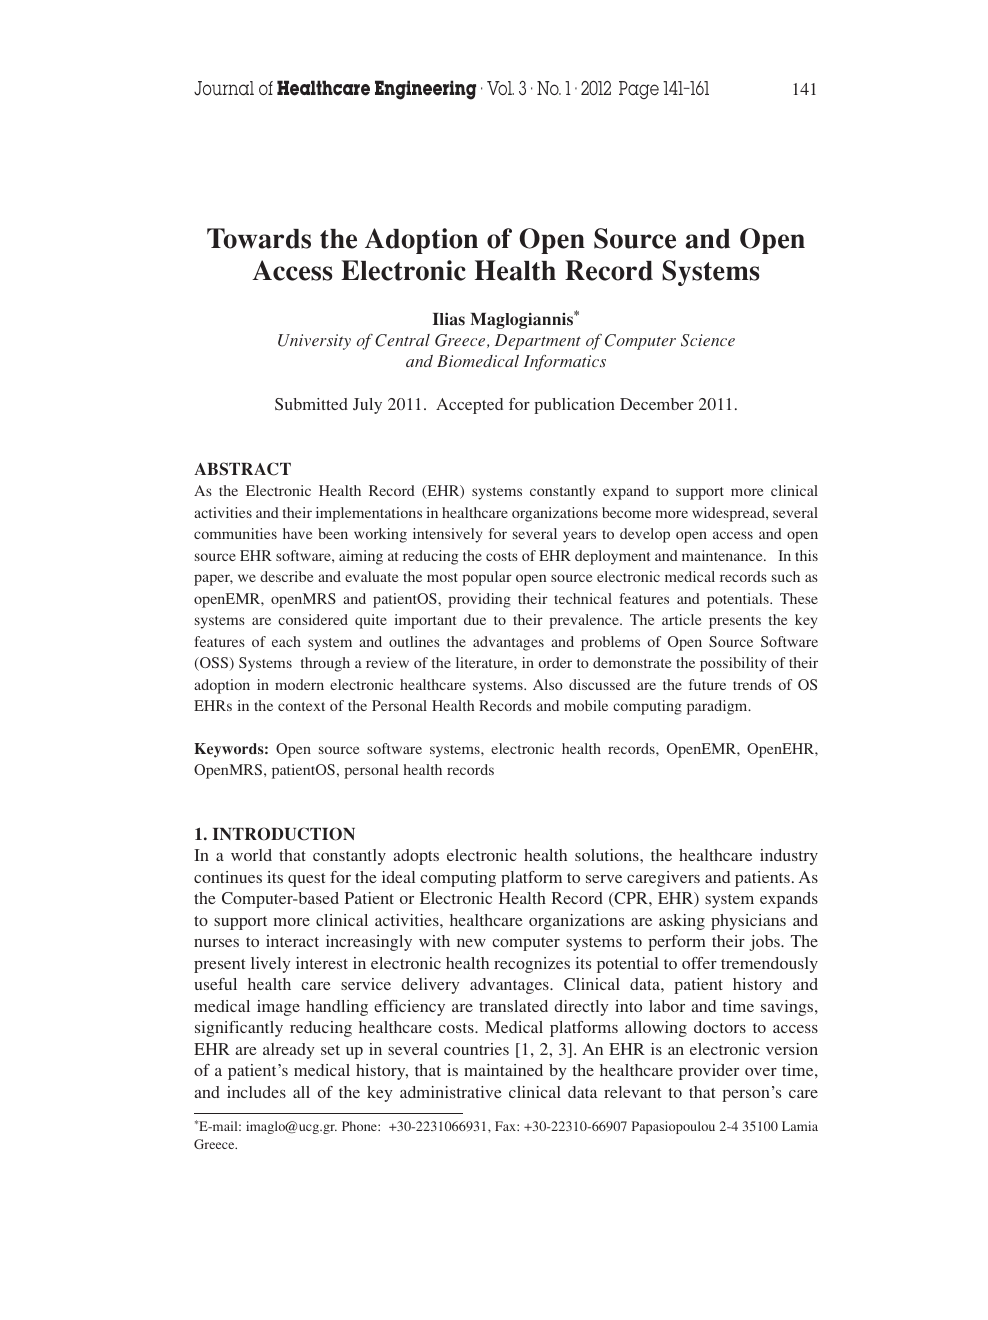 Insert background on login page - OpenEMR Development - OpenEMR Community